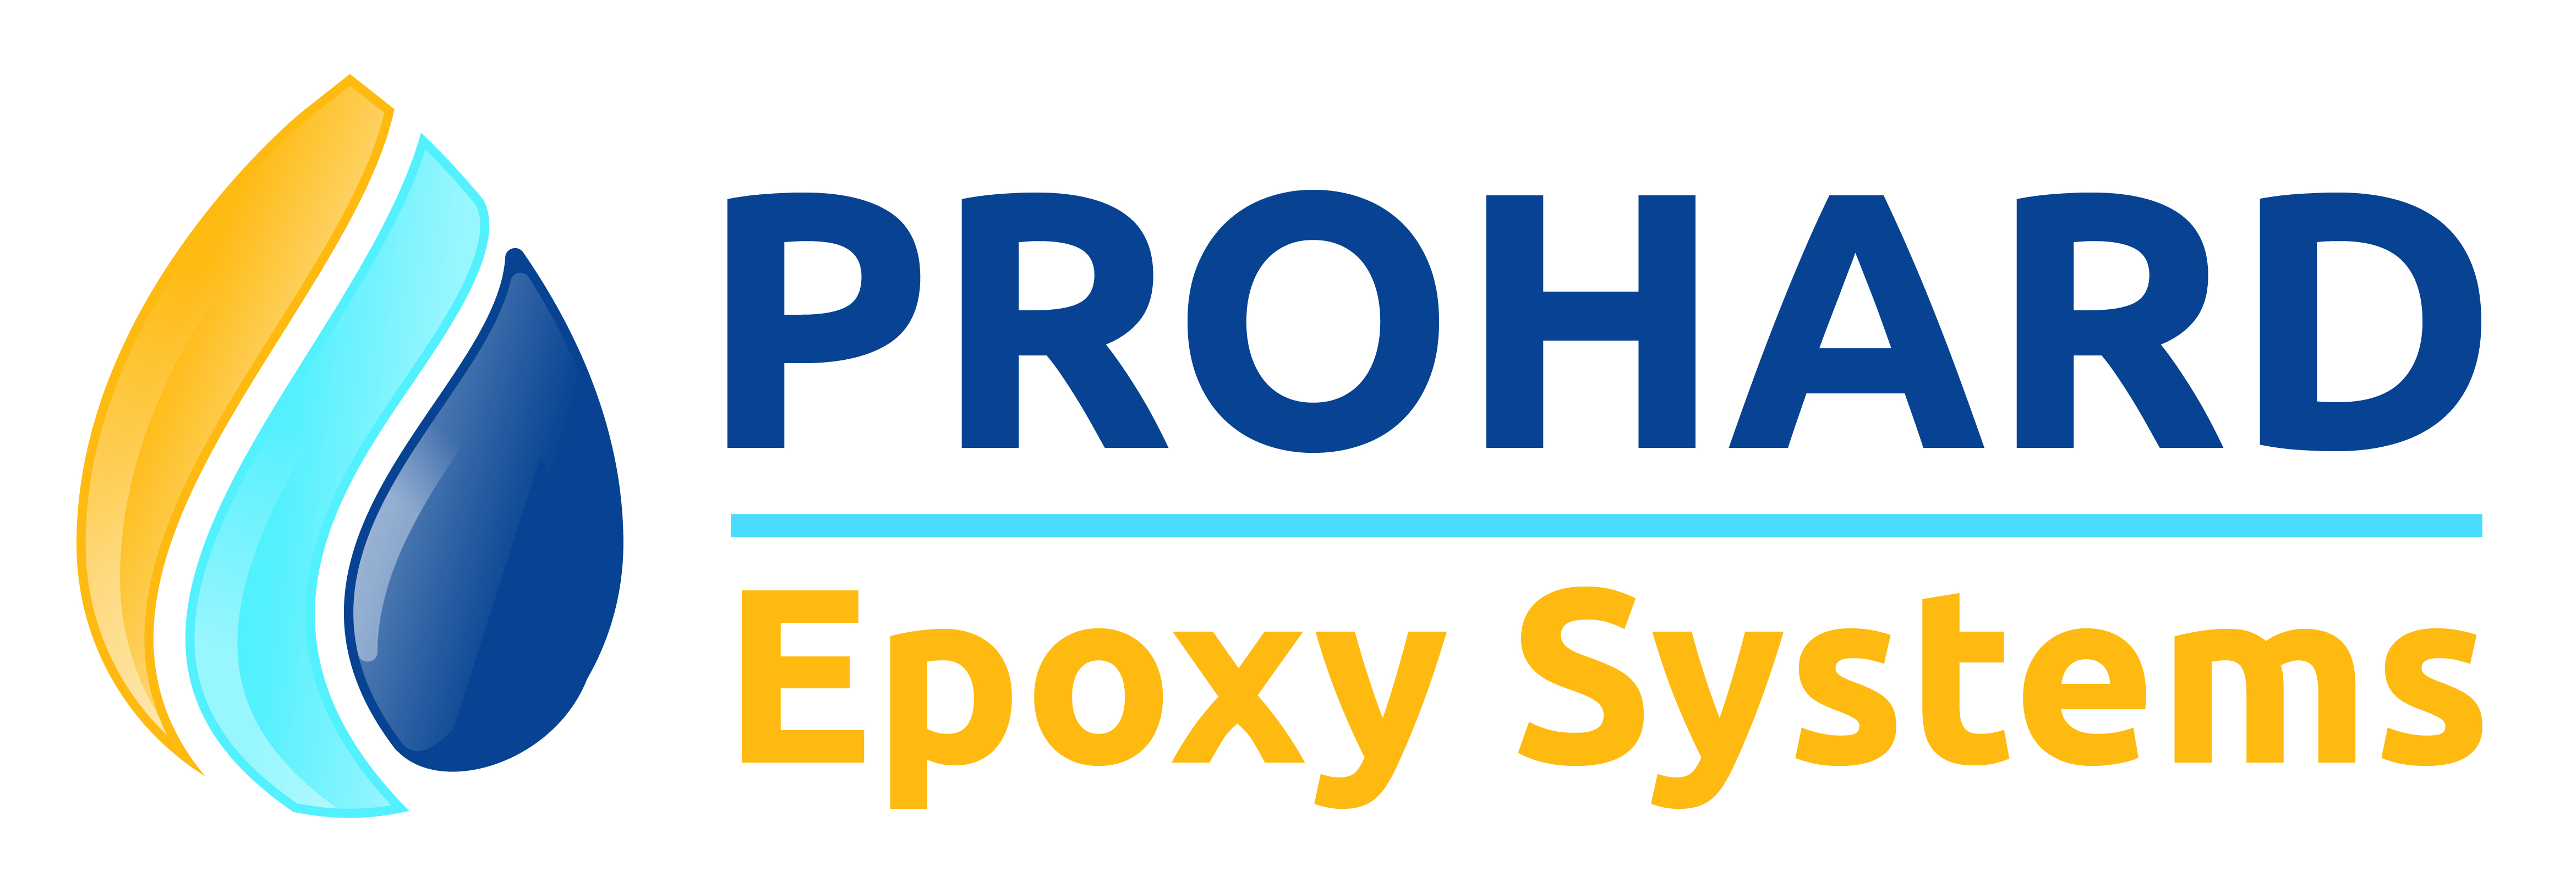 Prohard Epoxy System